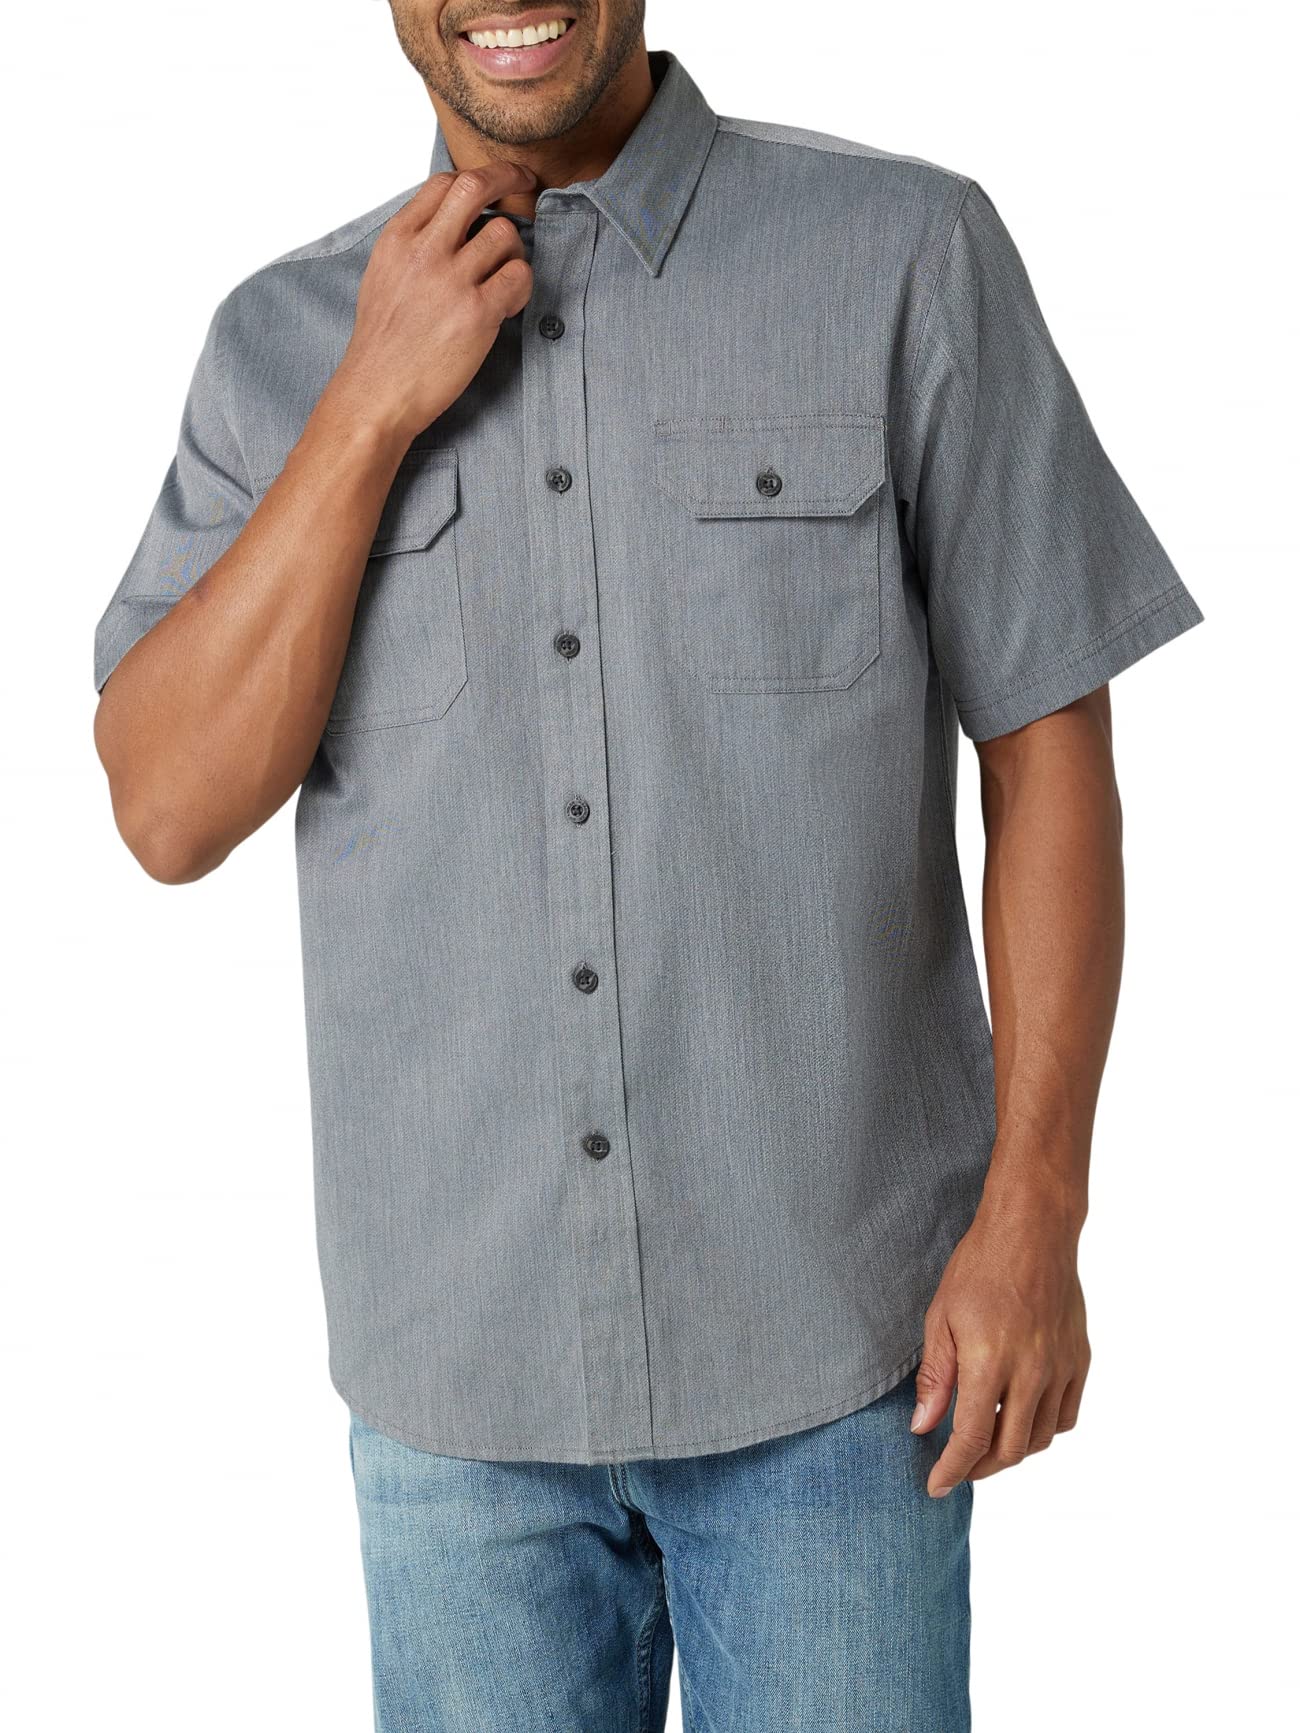 Wrangler Authentics Men's Short Sleeve Classic Woven Shirt, Asphalt Heather, Large